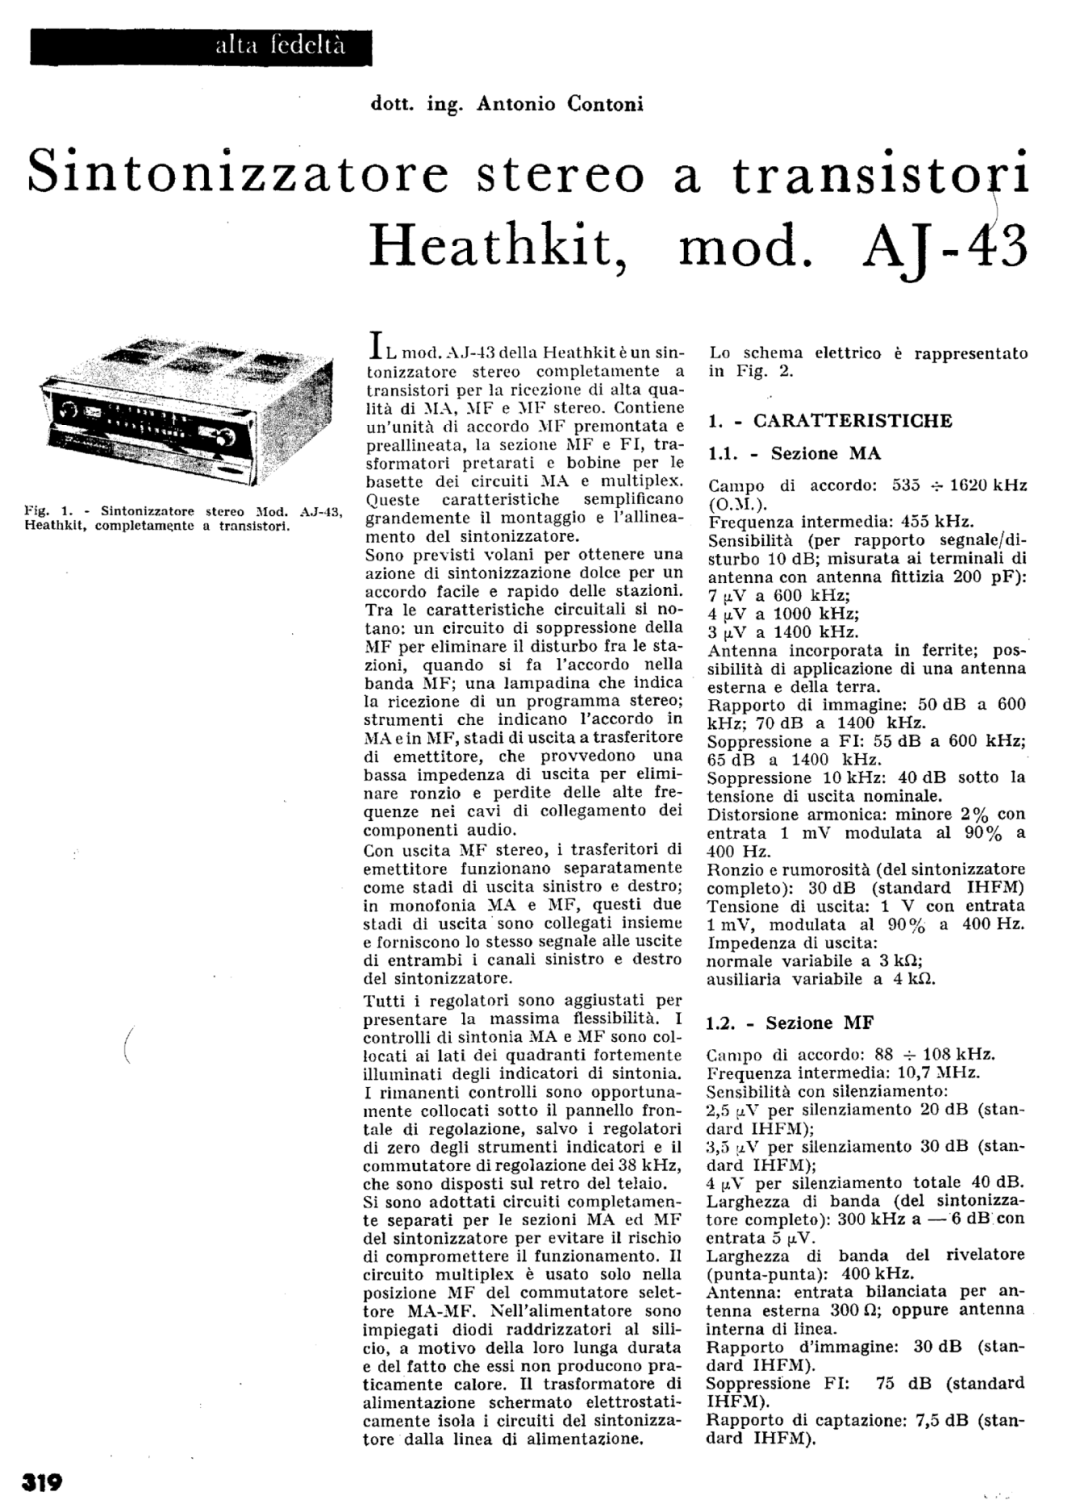 Heathkit AJ-43 Stereo Tuner - Italian Article